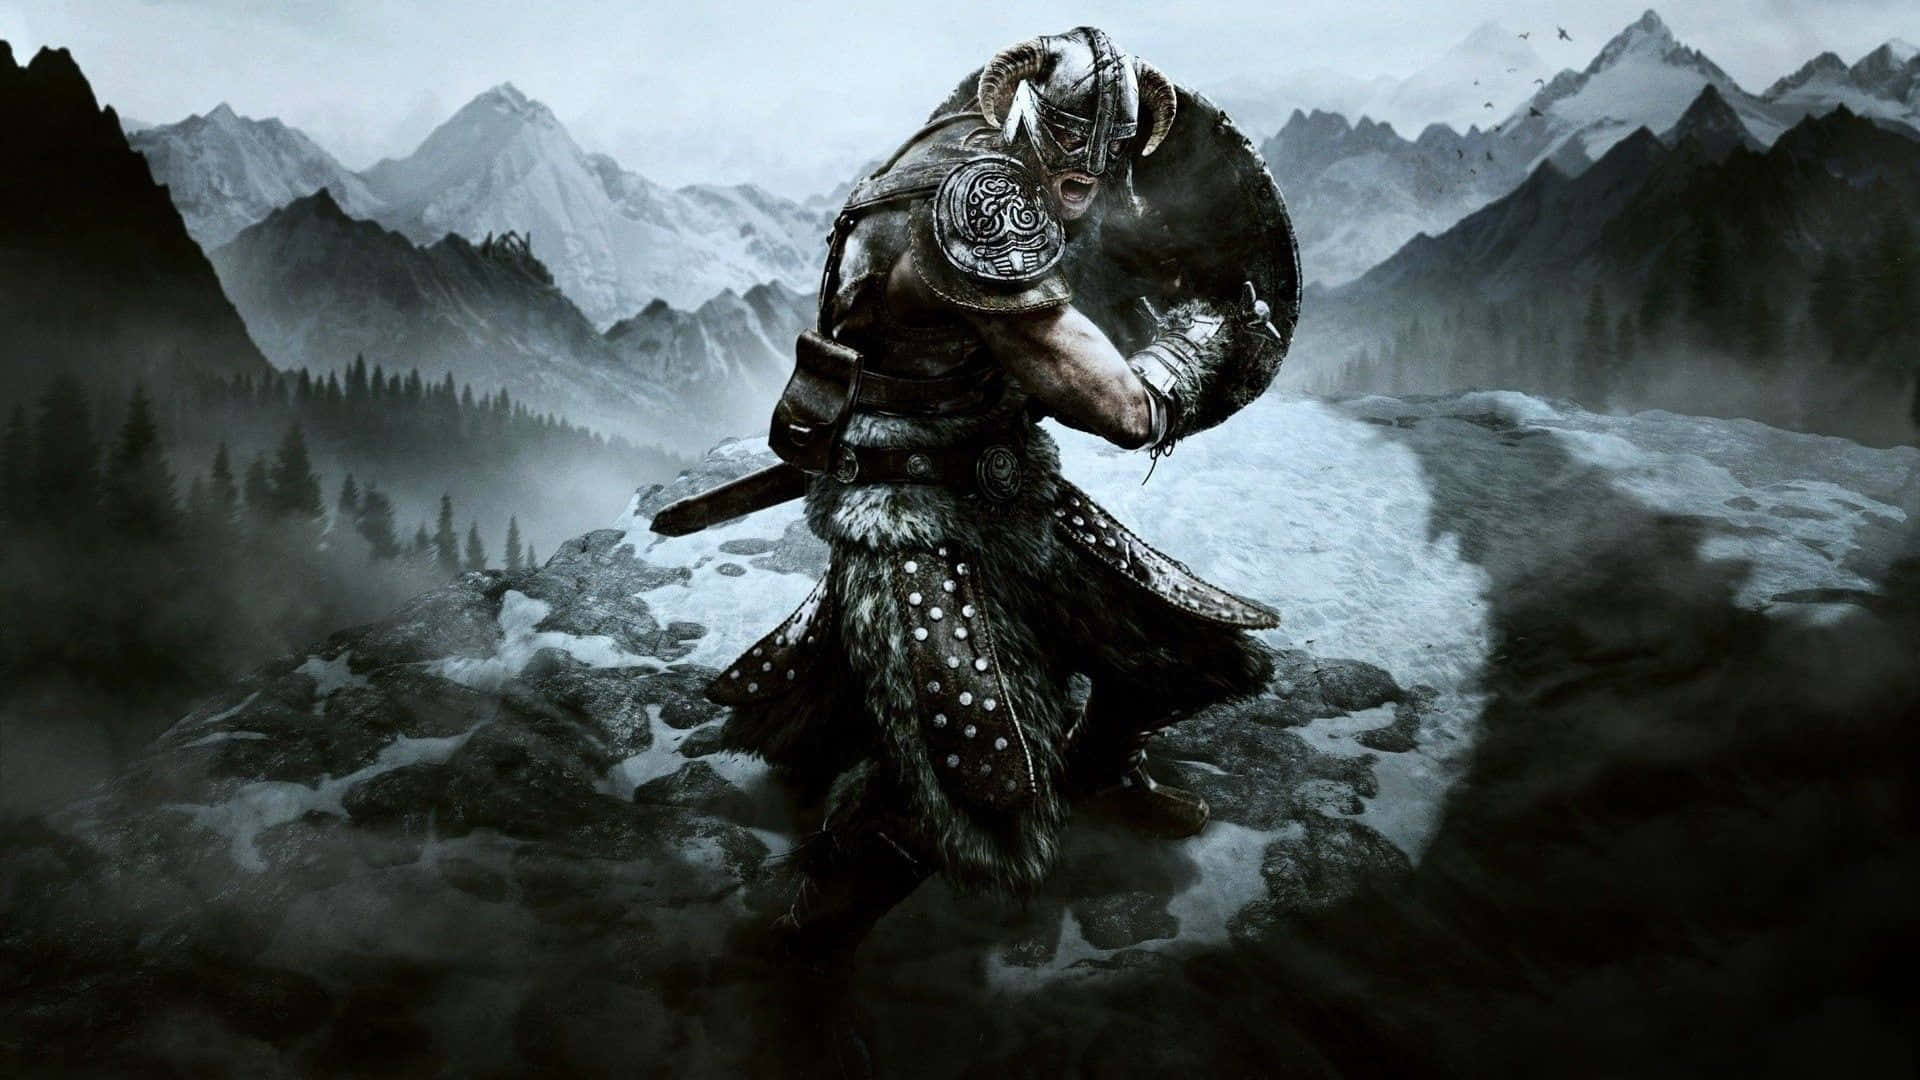 A fierce Viking warrior battling in the rugged terrain.